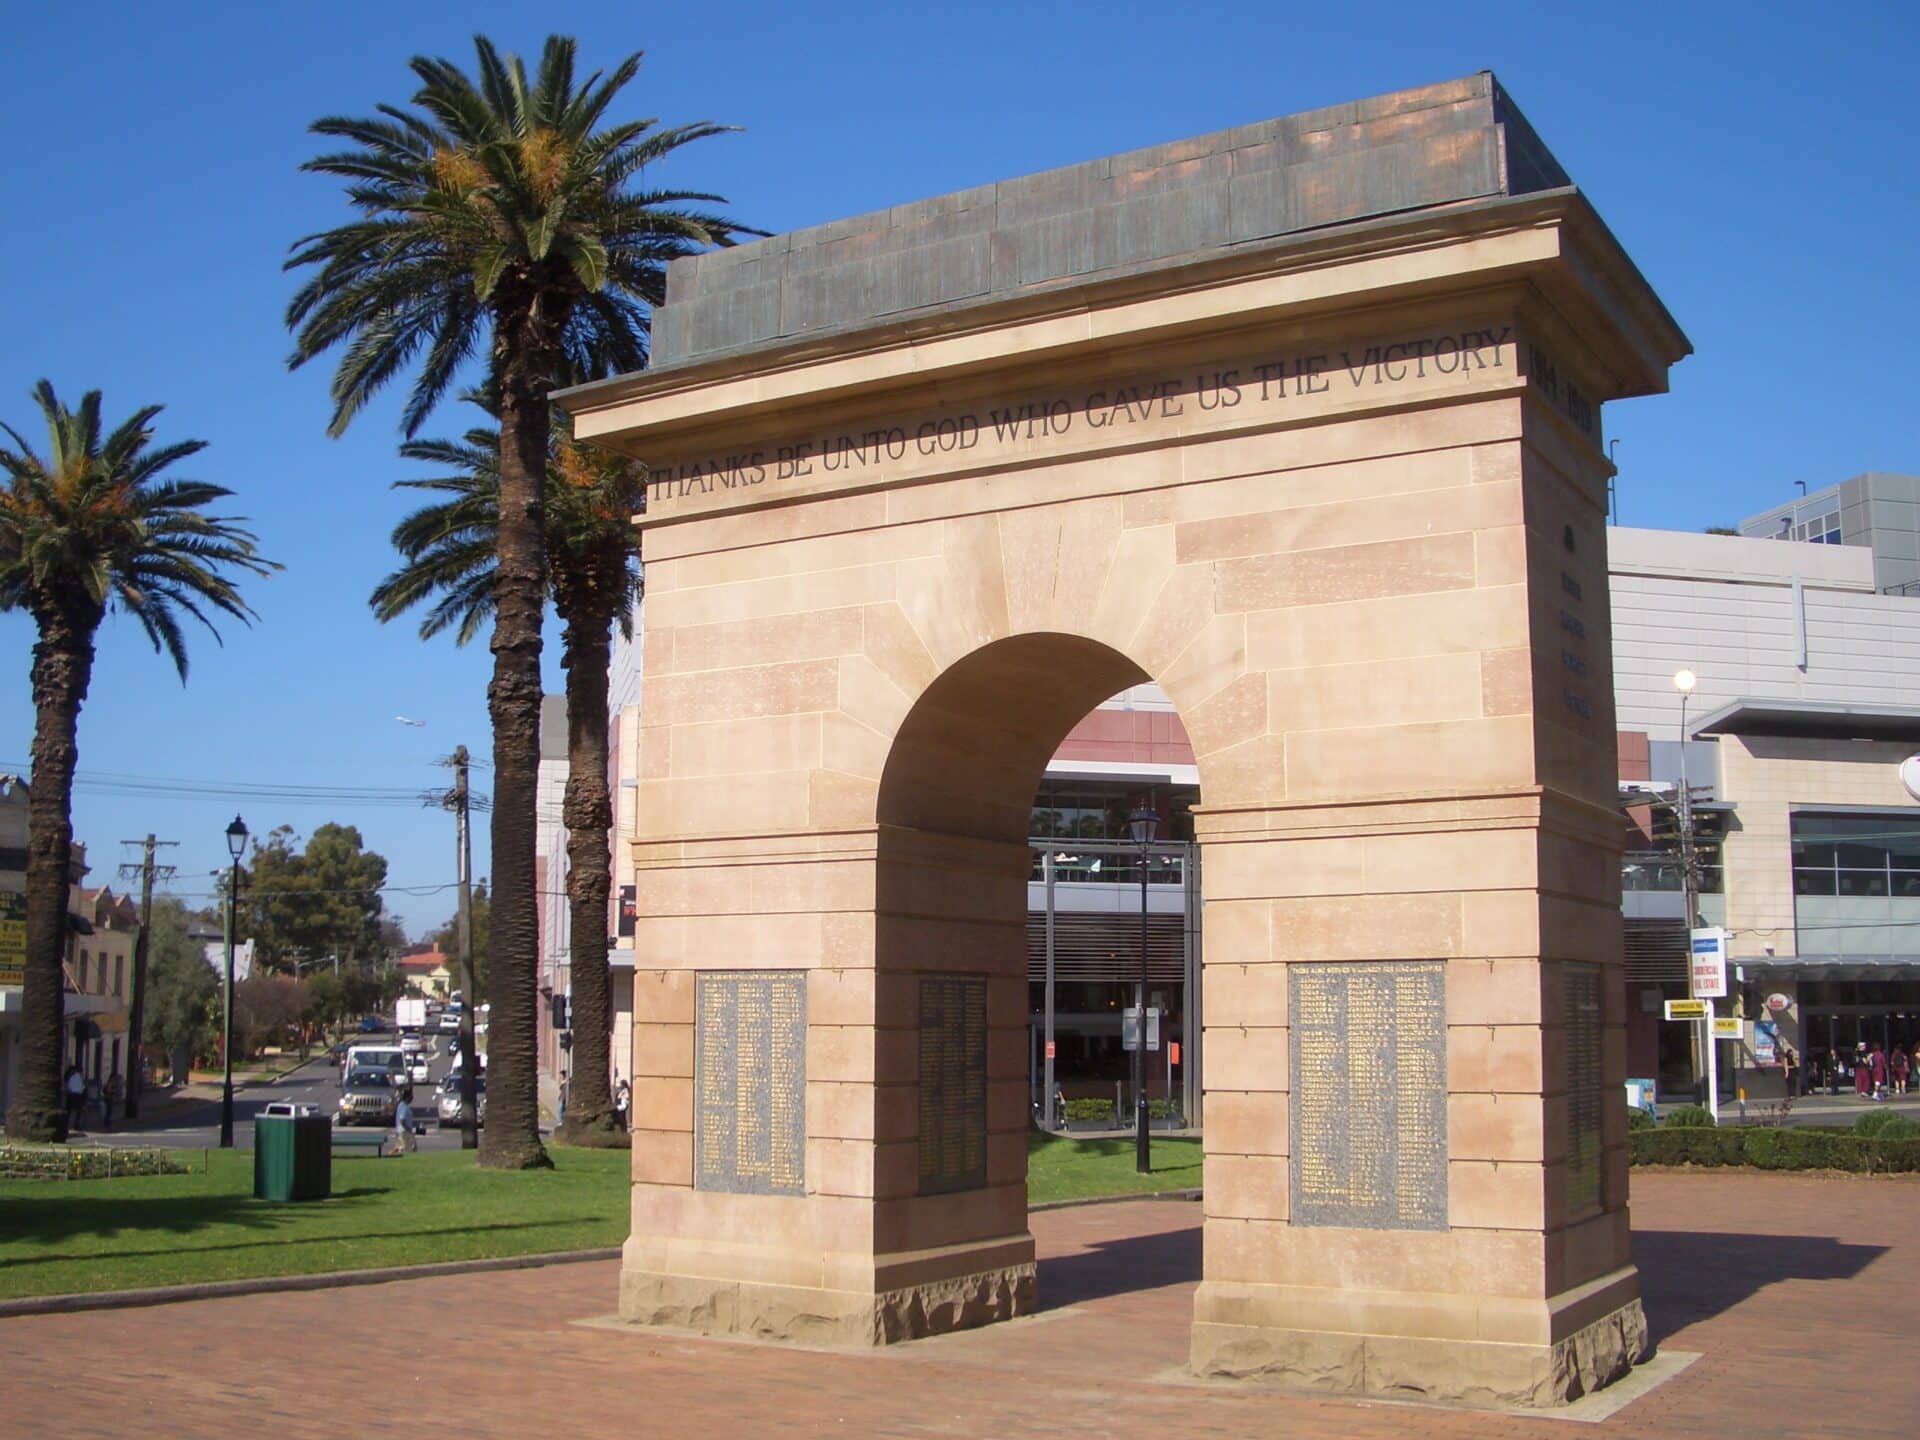 Burwood War Memorial Arch